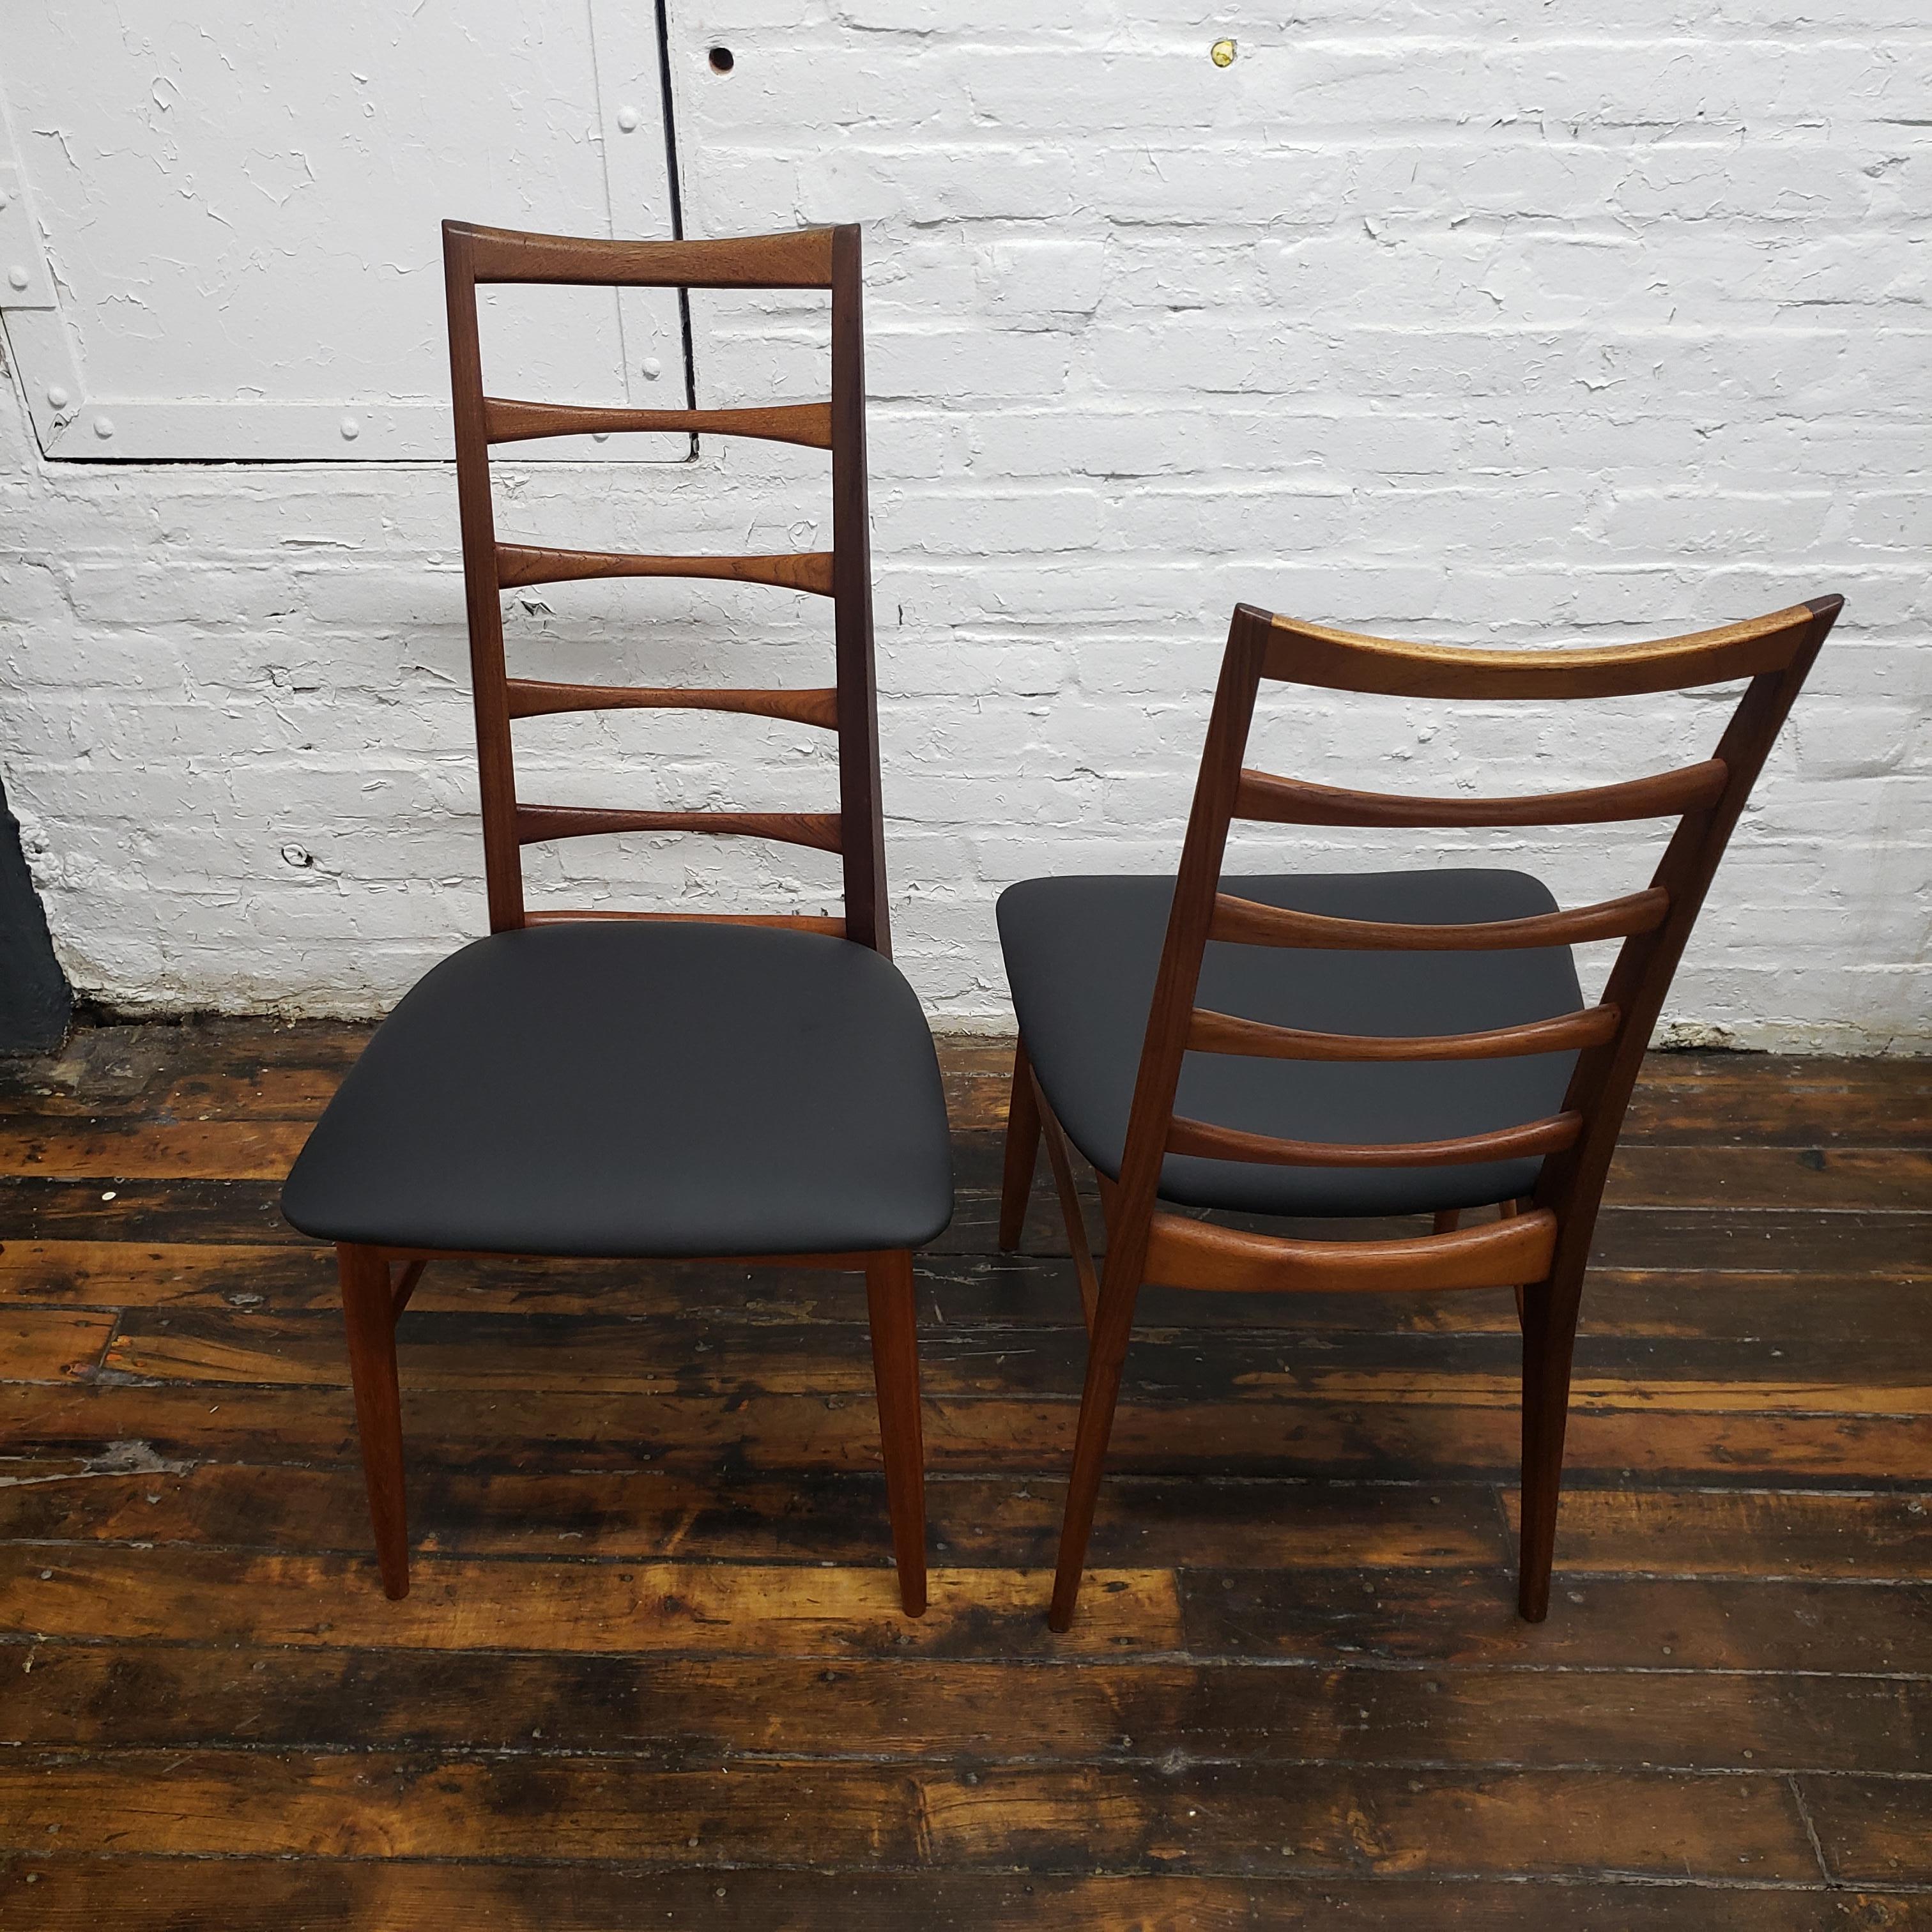 Mid-20th Century Set of Six Lis Dining Chair in Teak by Niels Koefoeds for Koefoeds Møbelfabrik